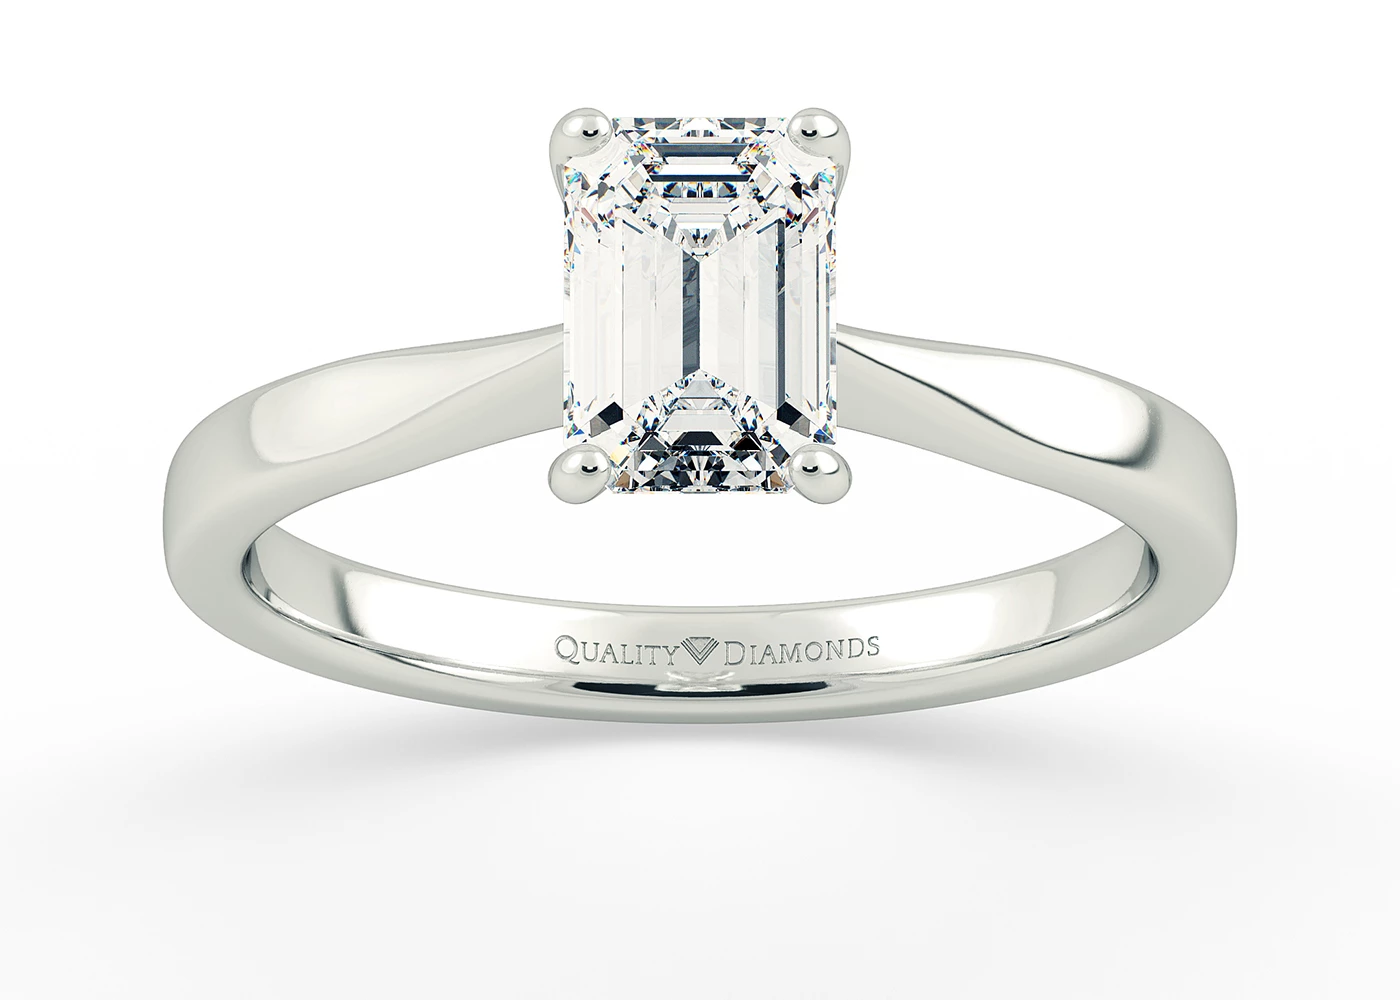 Emerald Beau Diamond Ring in 9K White Gold